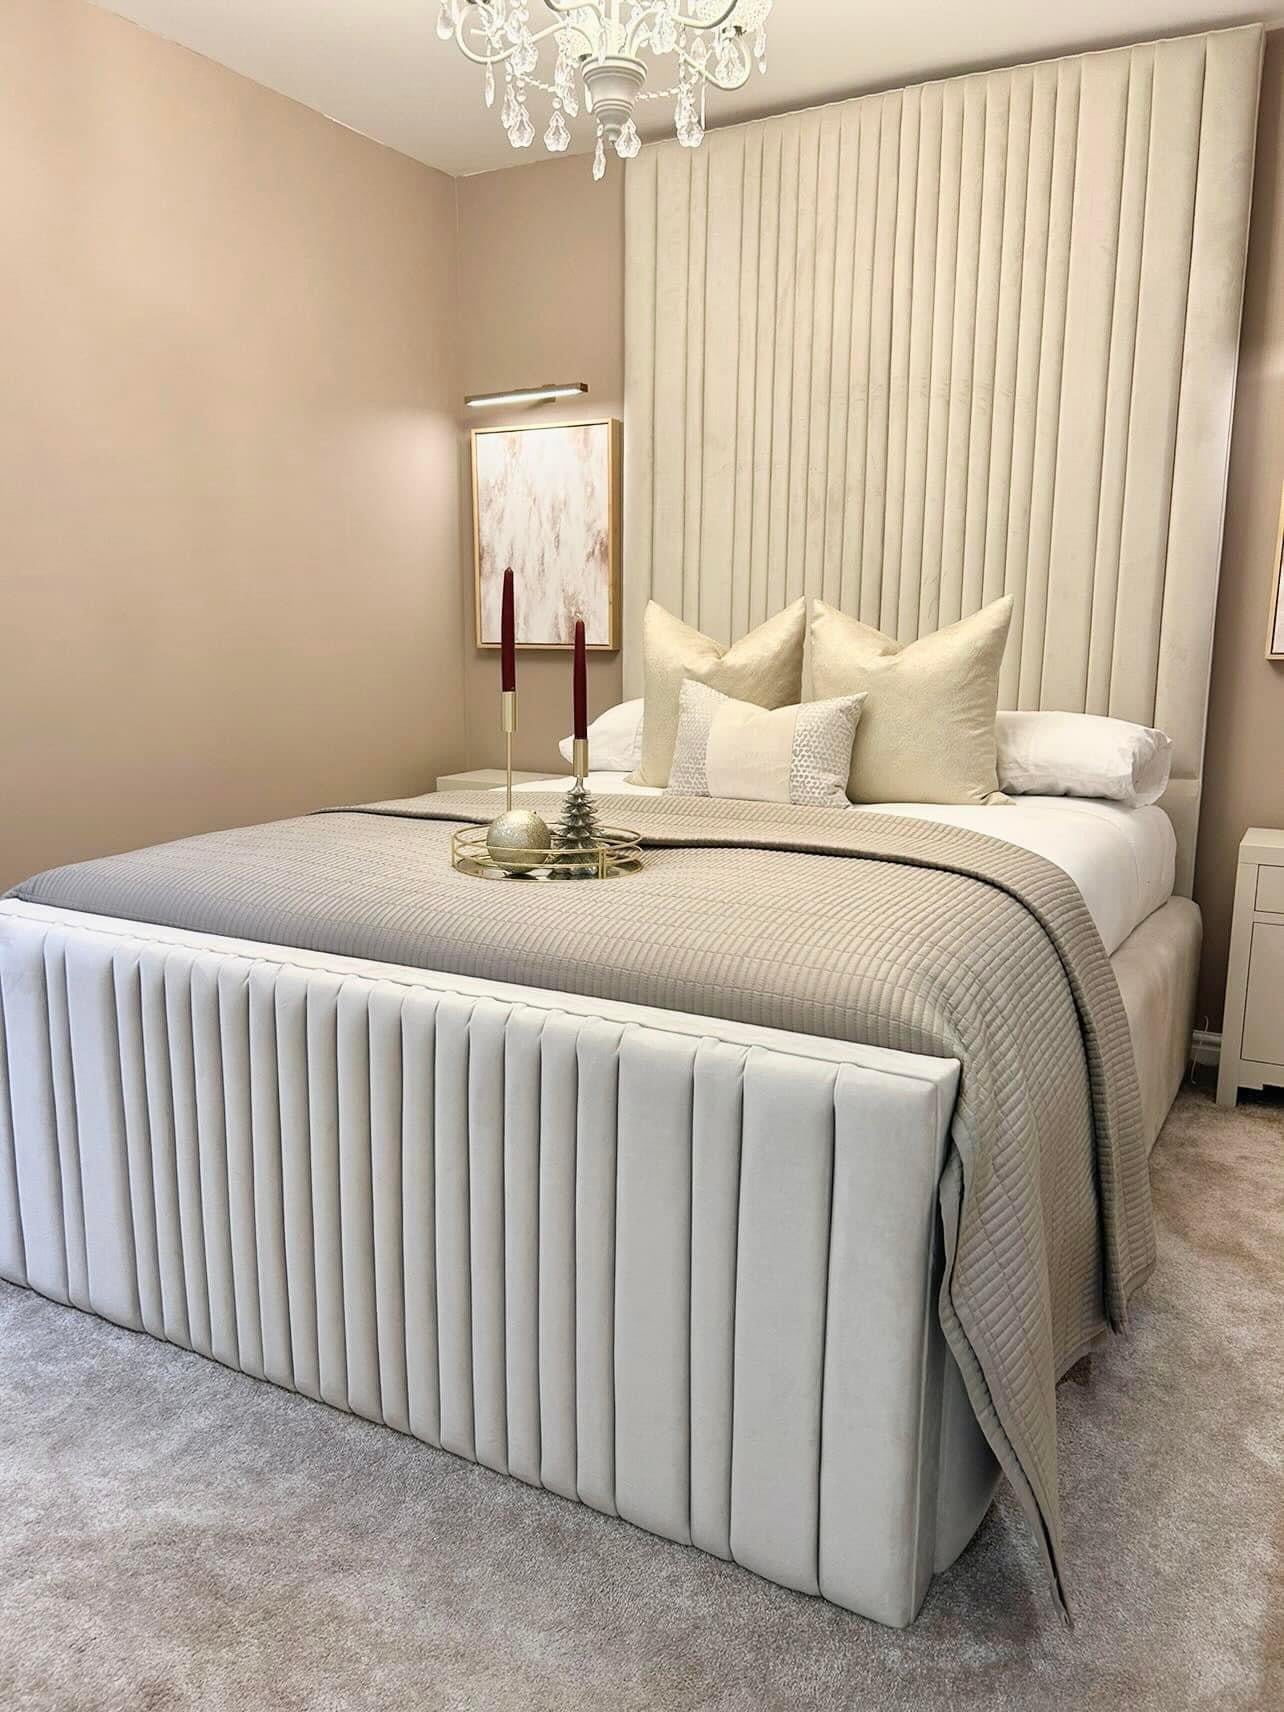 Ottavia Luxury Bed Frame With Optional Ottoman Storage